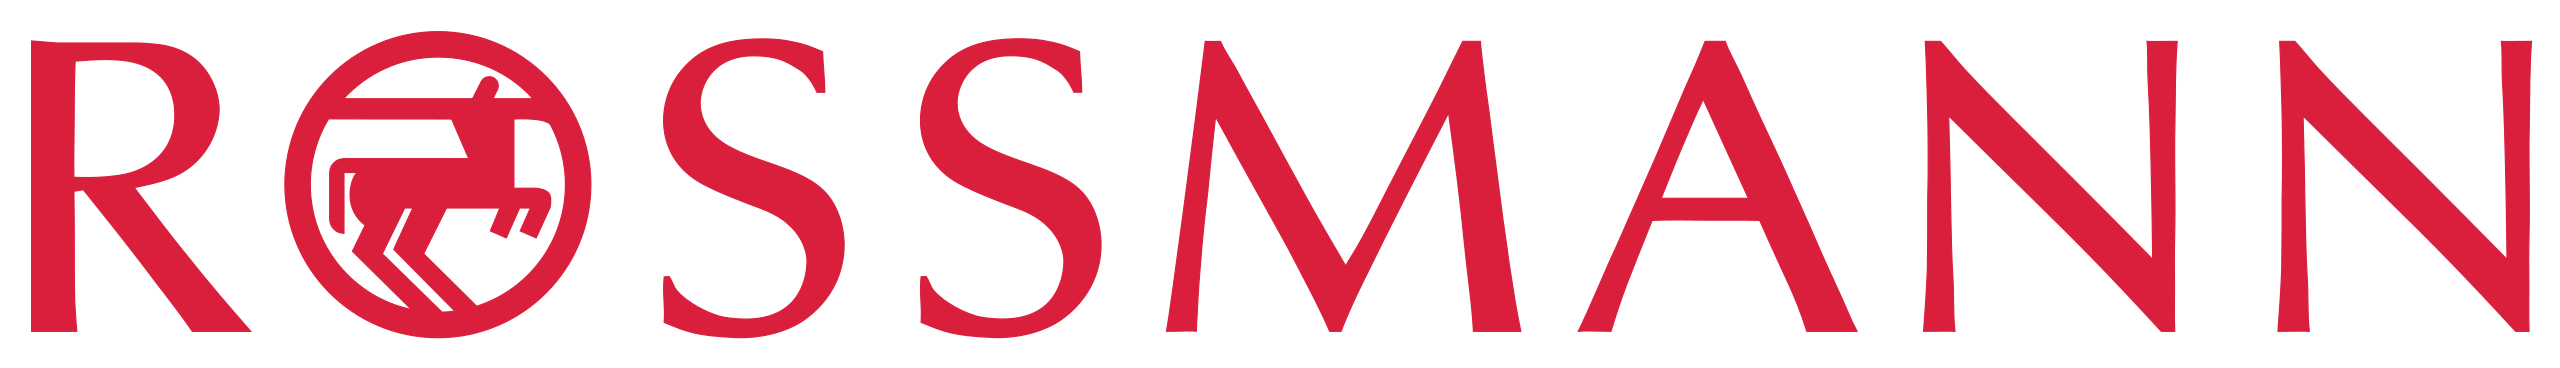 2560px-Rossmann_Logo.svg